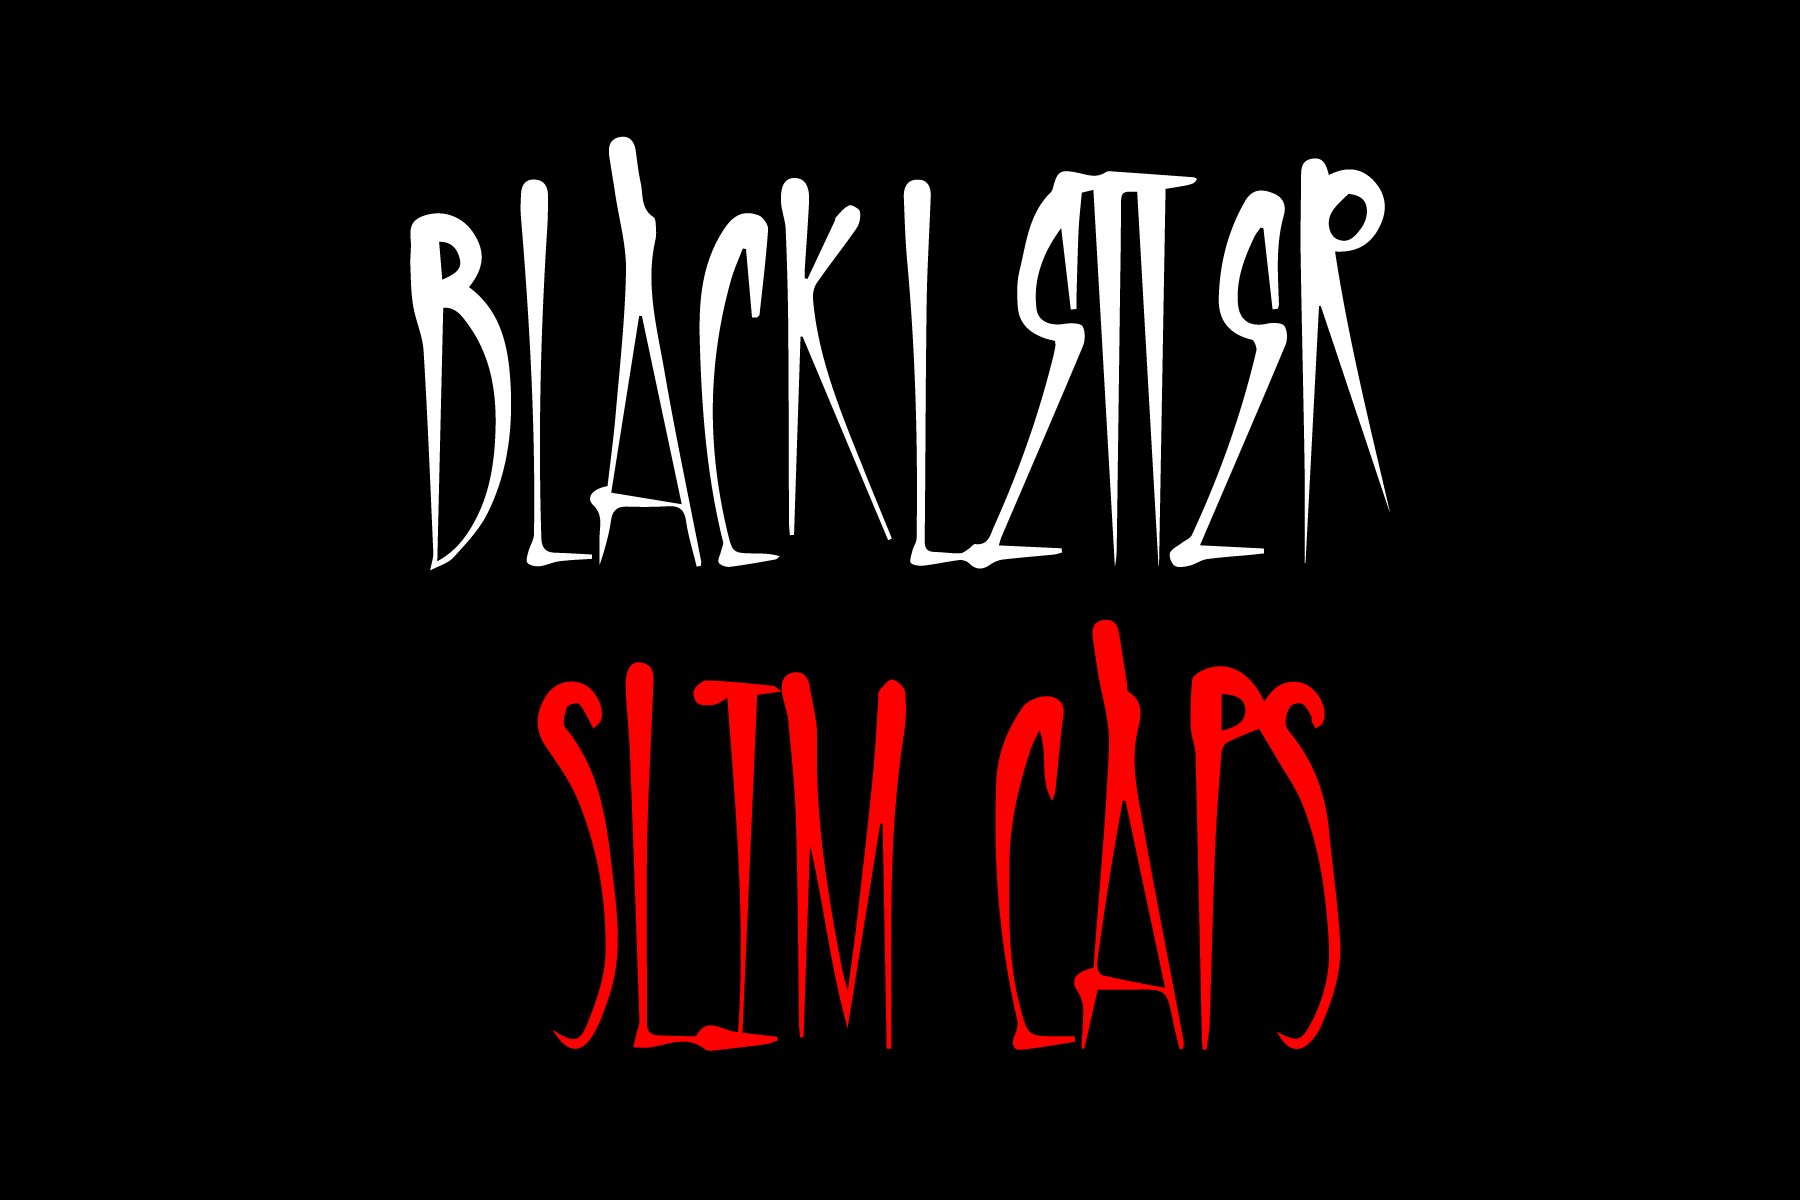 BLACKLETTER SLIM CAPS preview image.